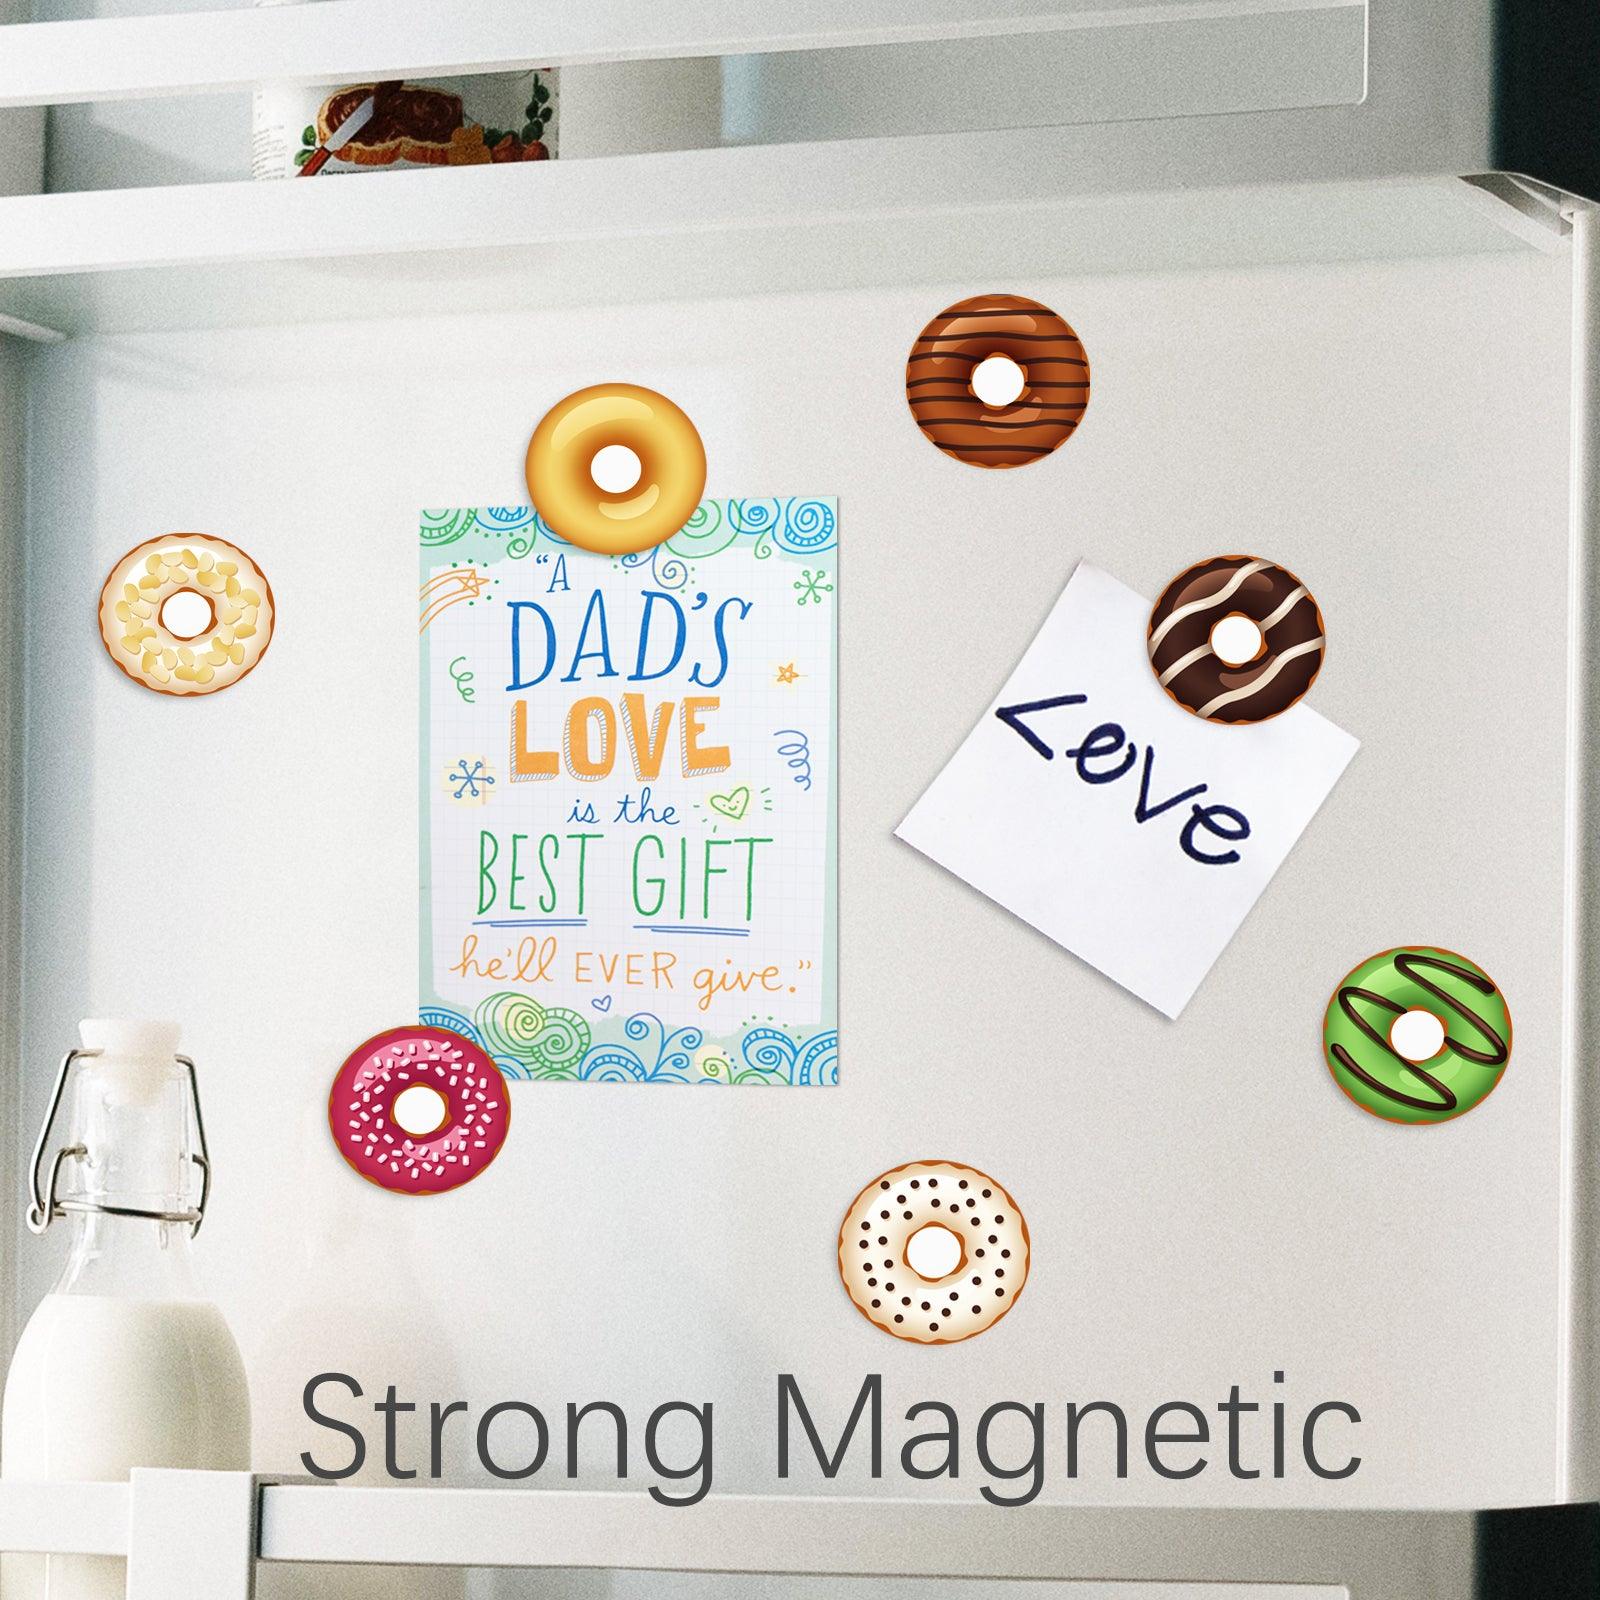 Magnet frigo en forme de donuts - aimant frigo - Univers Magnétique